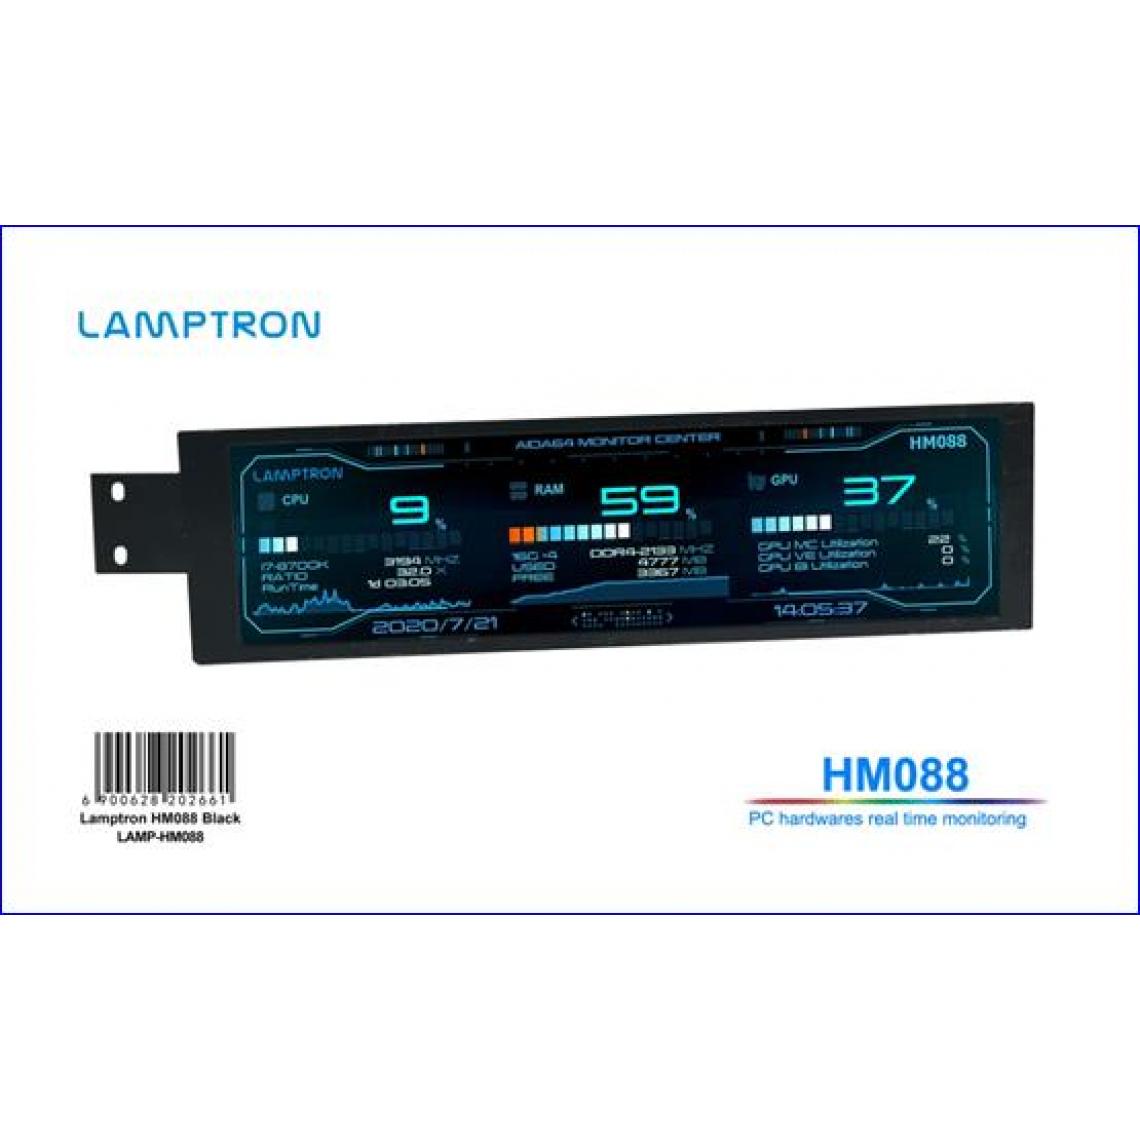 Lamptron - HM088 Hardware Monitor - Moniteur PC